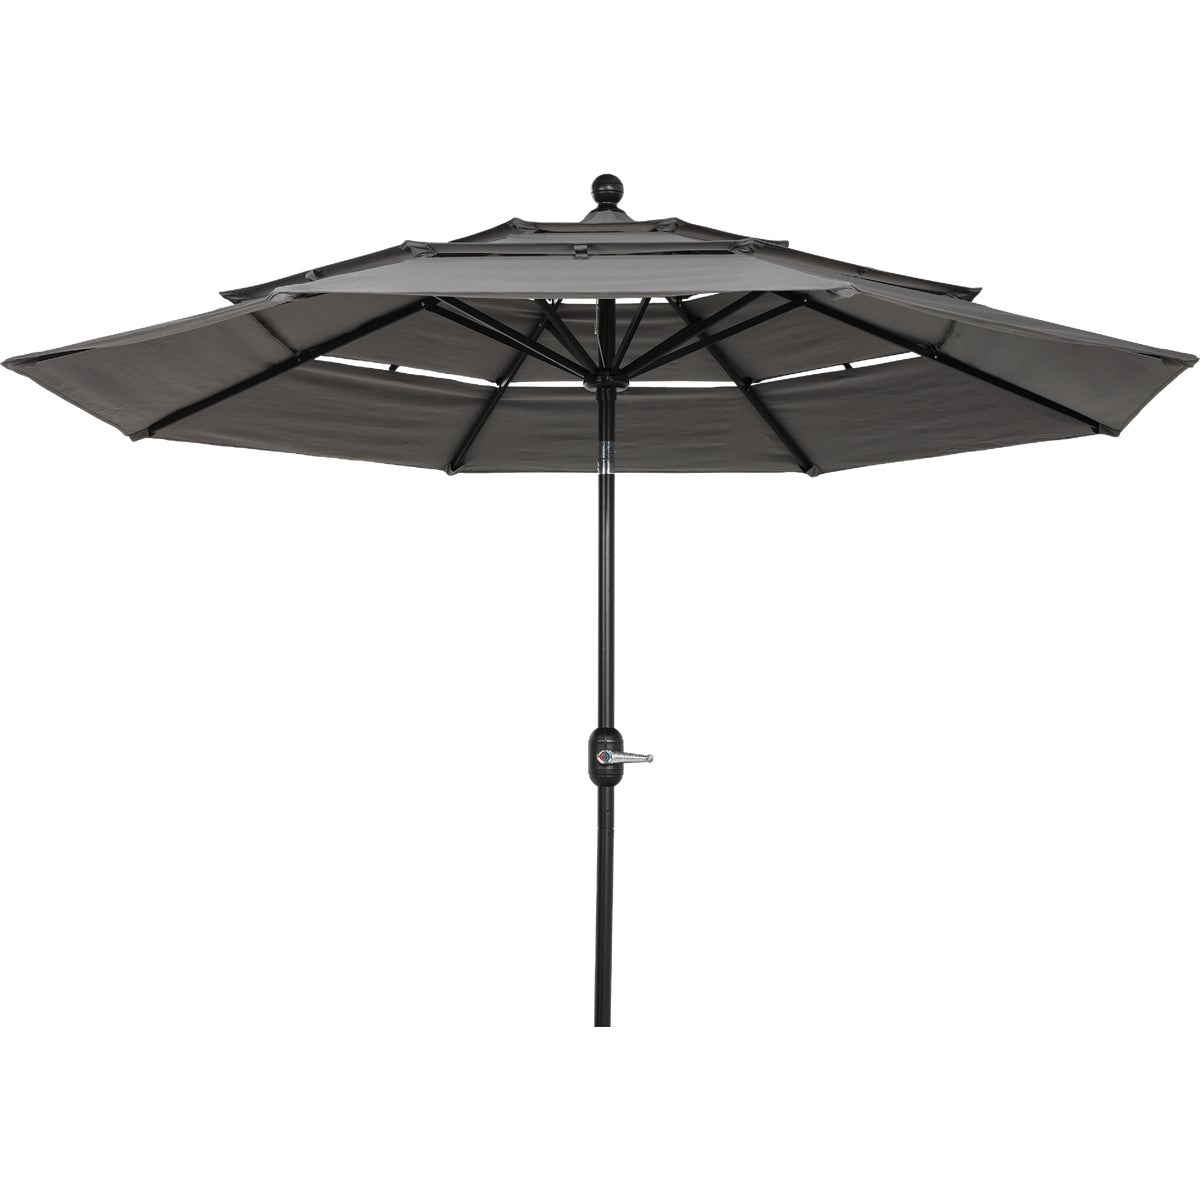 Outdoor Expressions 9 Ft. 3-Tier Tilt/Crank Smoke Gray Patio Umbrella